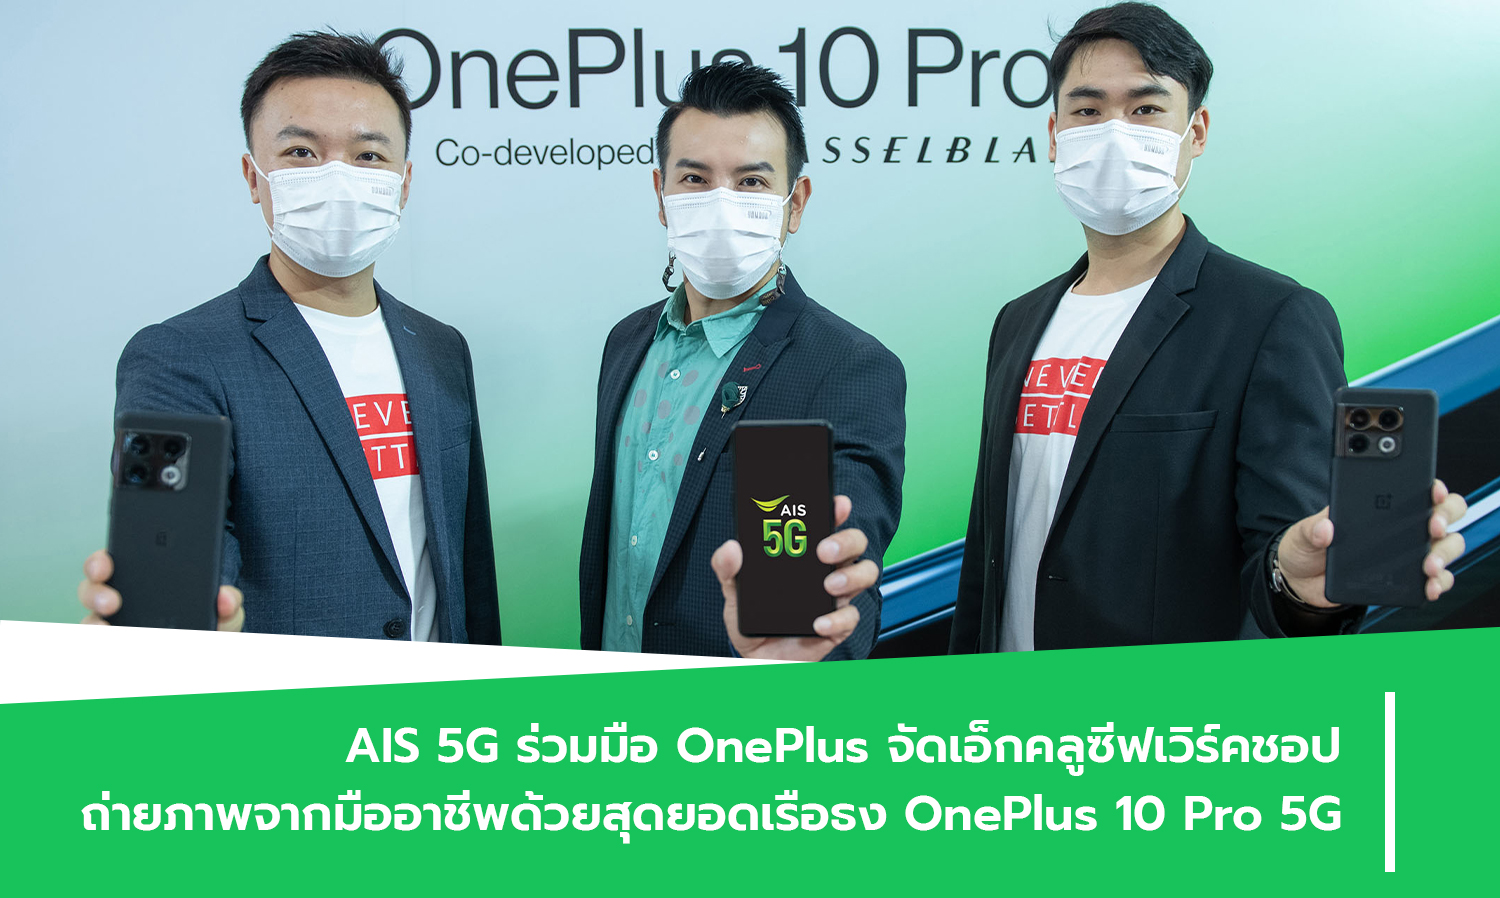 AIS 5G ร่วมมือ OnePlus จัดเอ็กคลูซีฟเวิร์คชอปถ่ายภาพจากมืออาชีพด้วยสุดยอดเรือธง OnePlus 10 Pro 5G